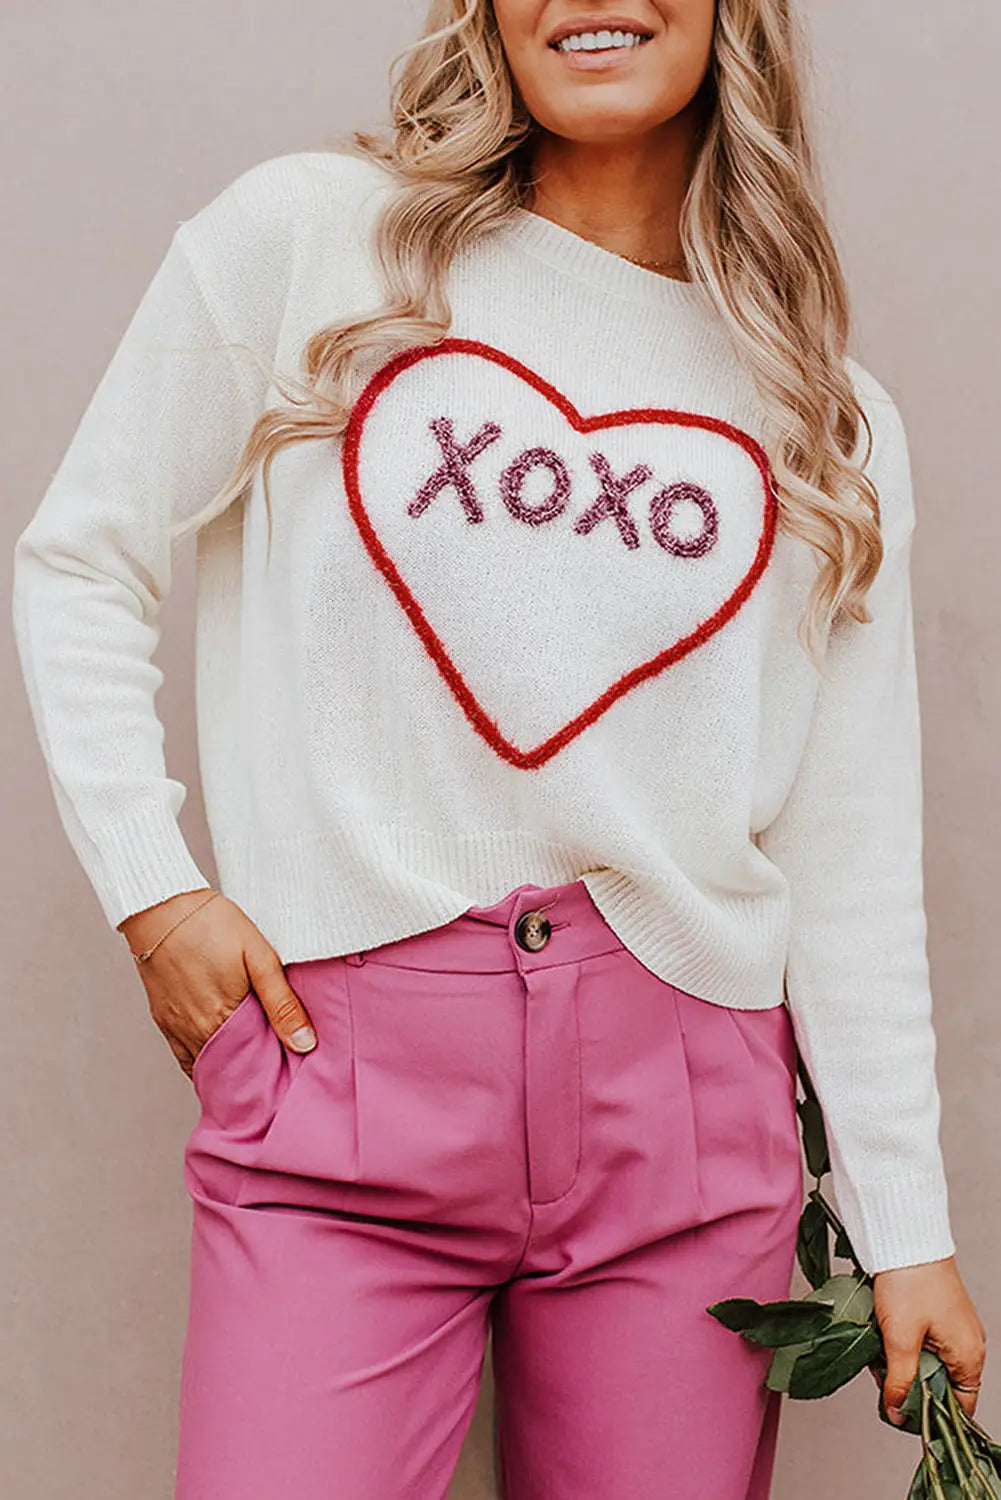 Rose heart xoxo pattern drop shoulder rib knit sweater - white / l / 55% acrylic + 45% cotton - sweaters & cardigans